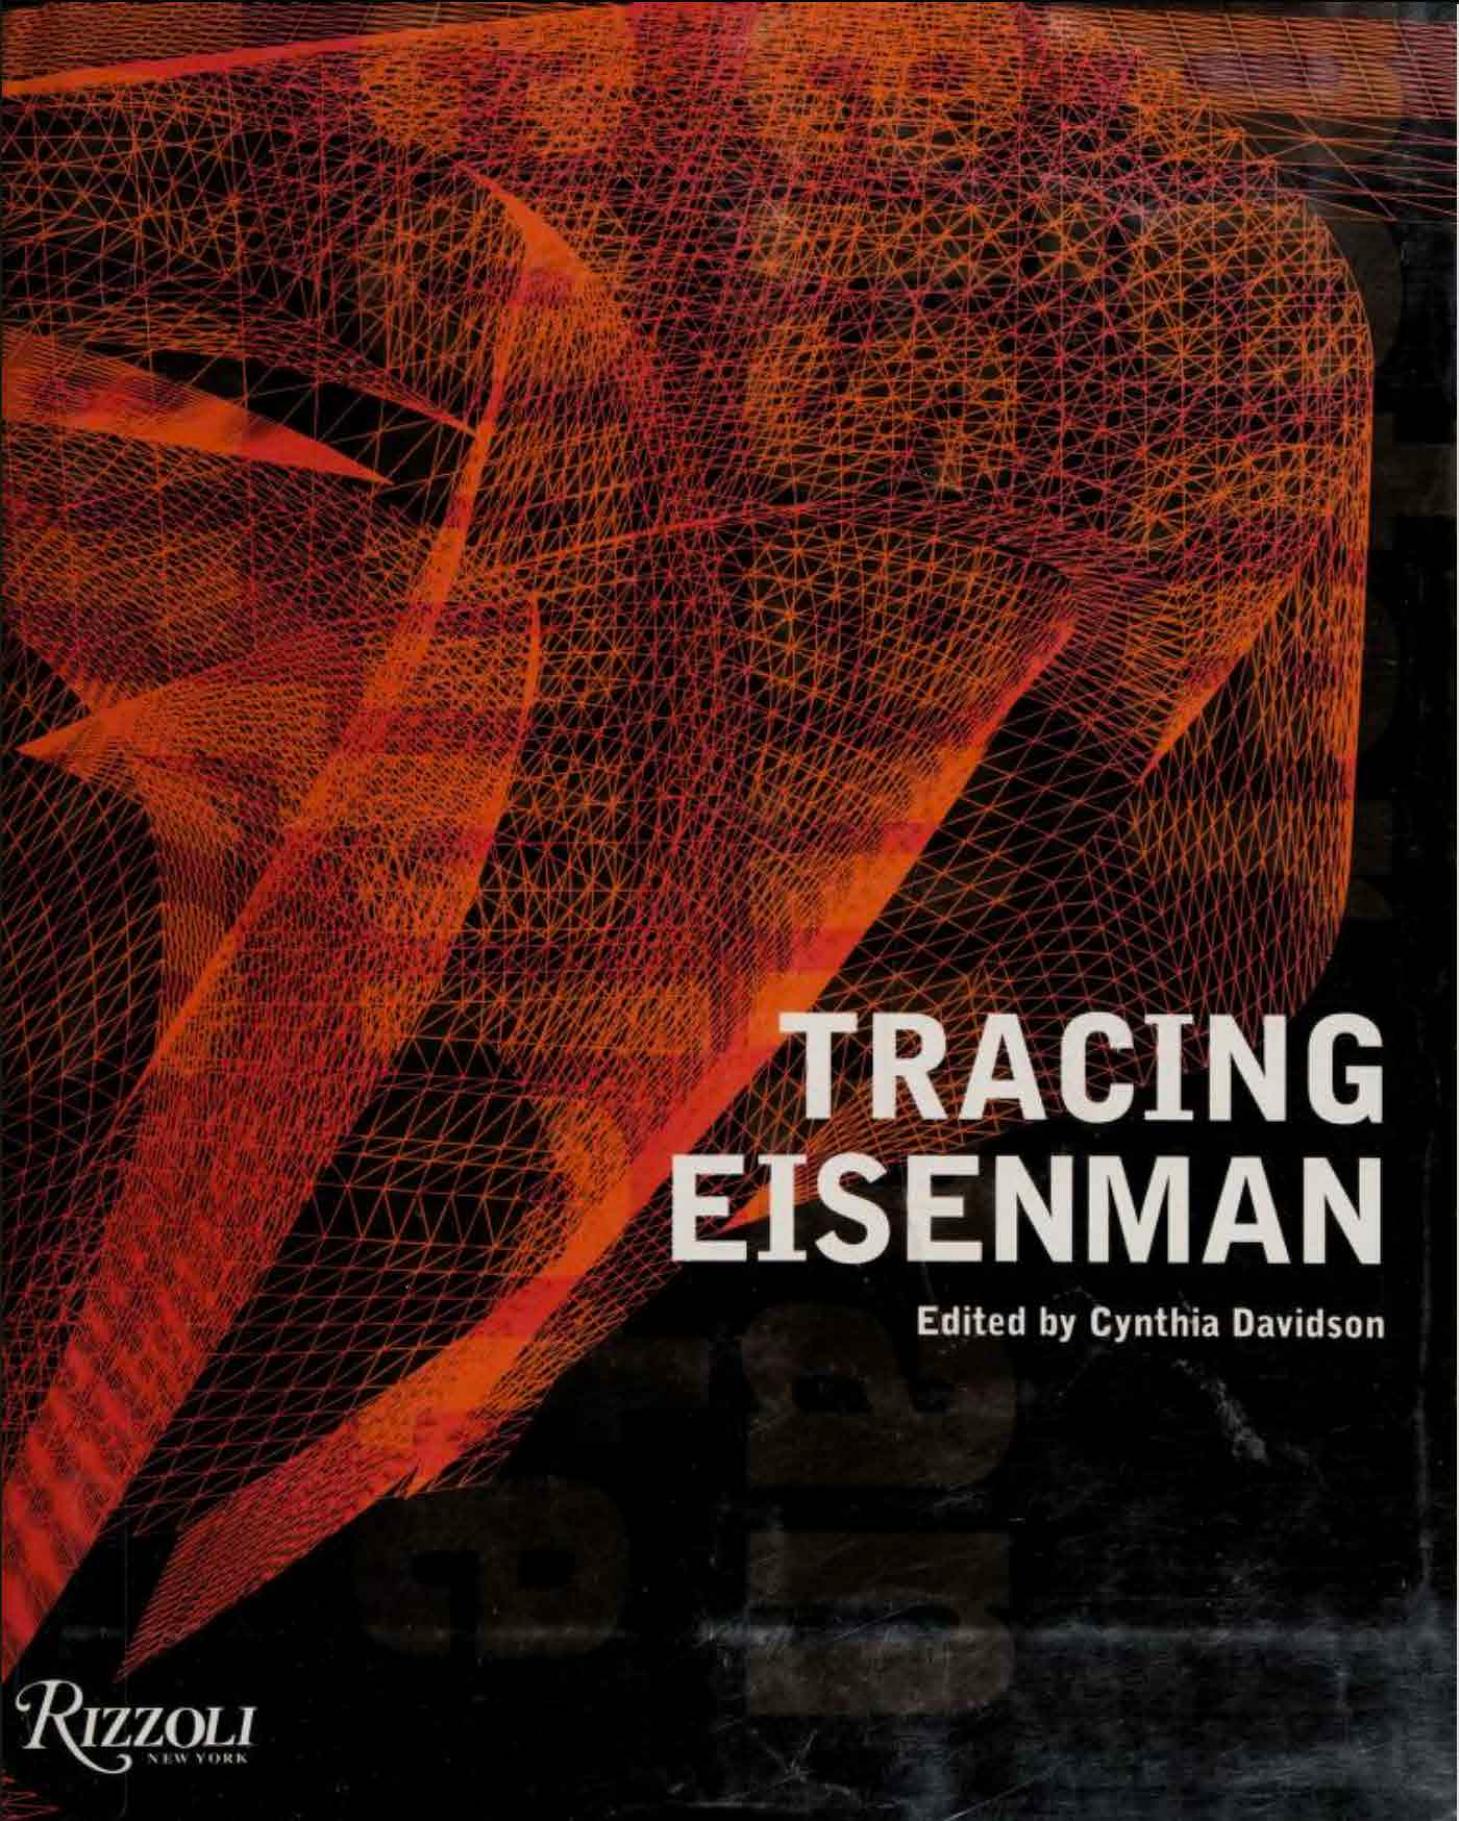 Tracing Eisenman: Peter Eisenman Complete Works by Cynthia Davidson (editor)